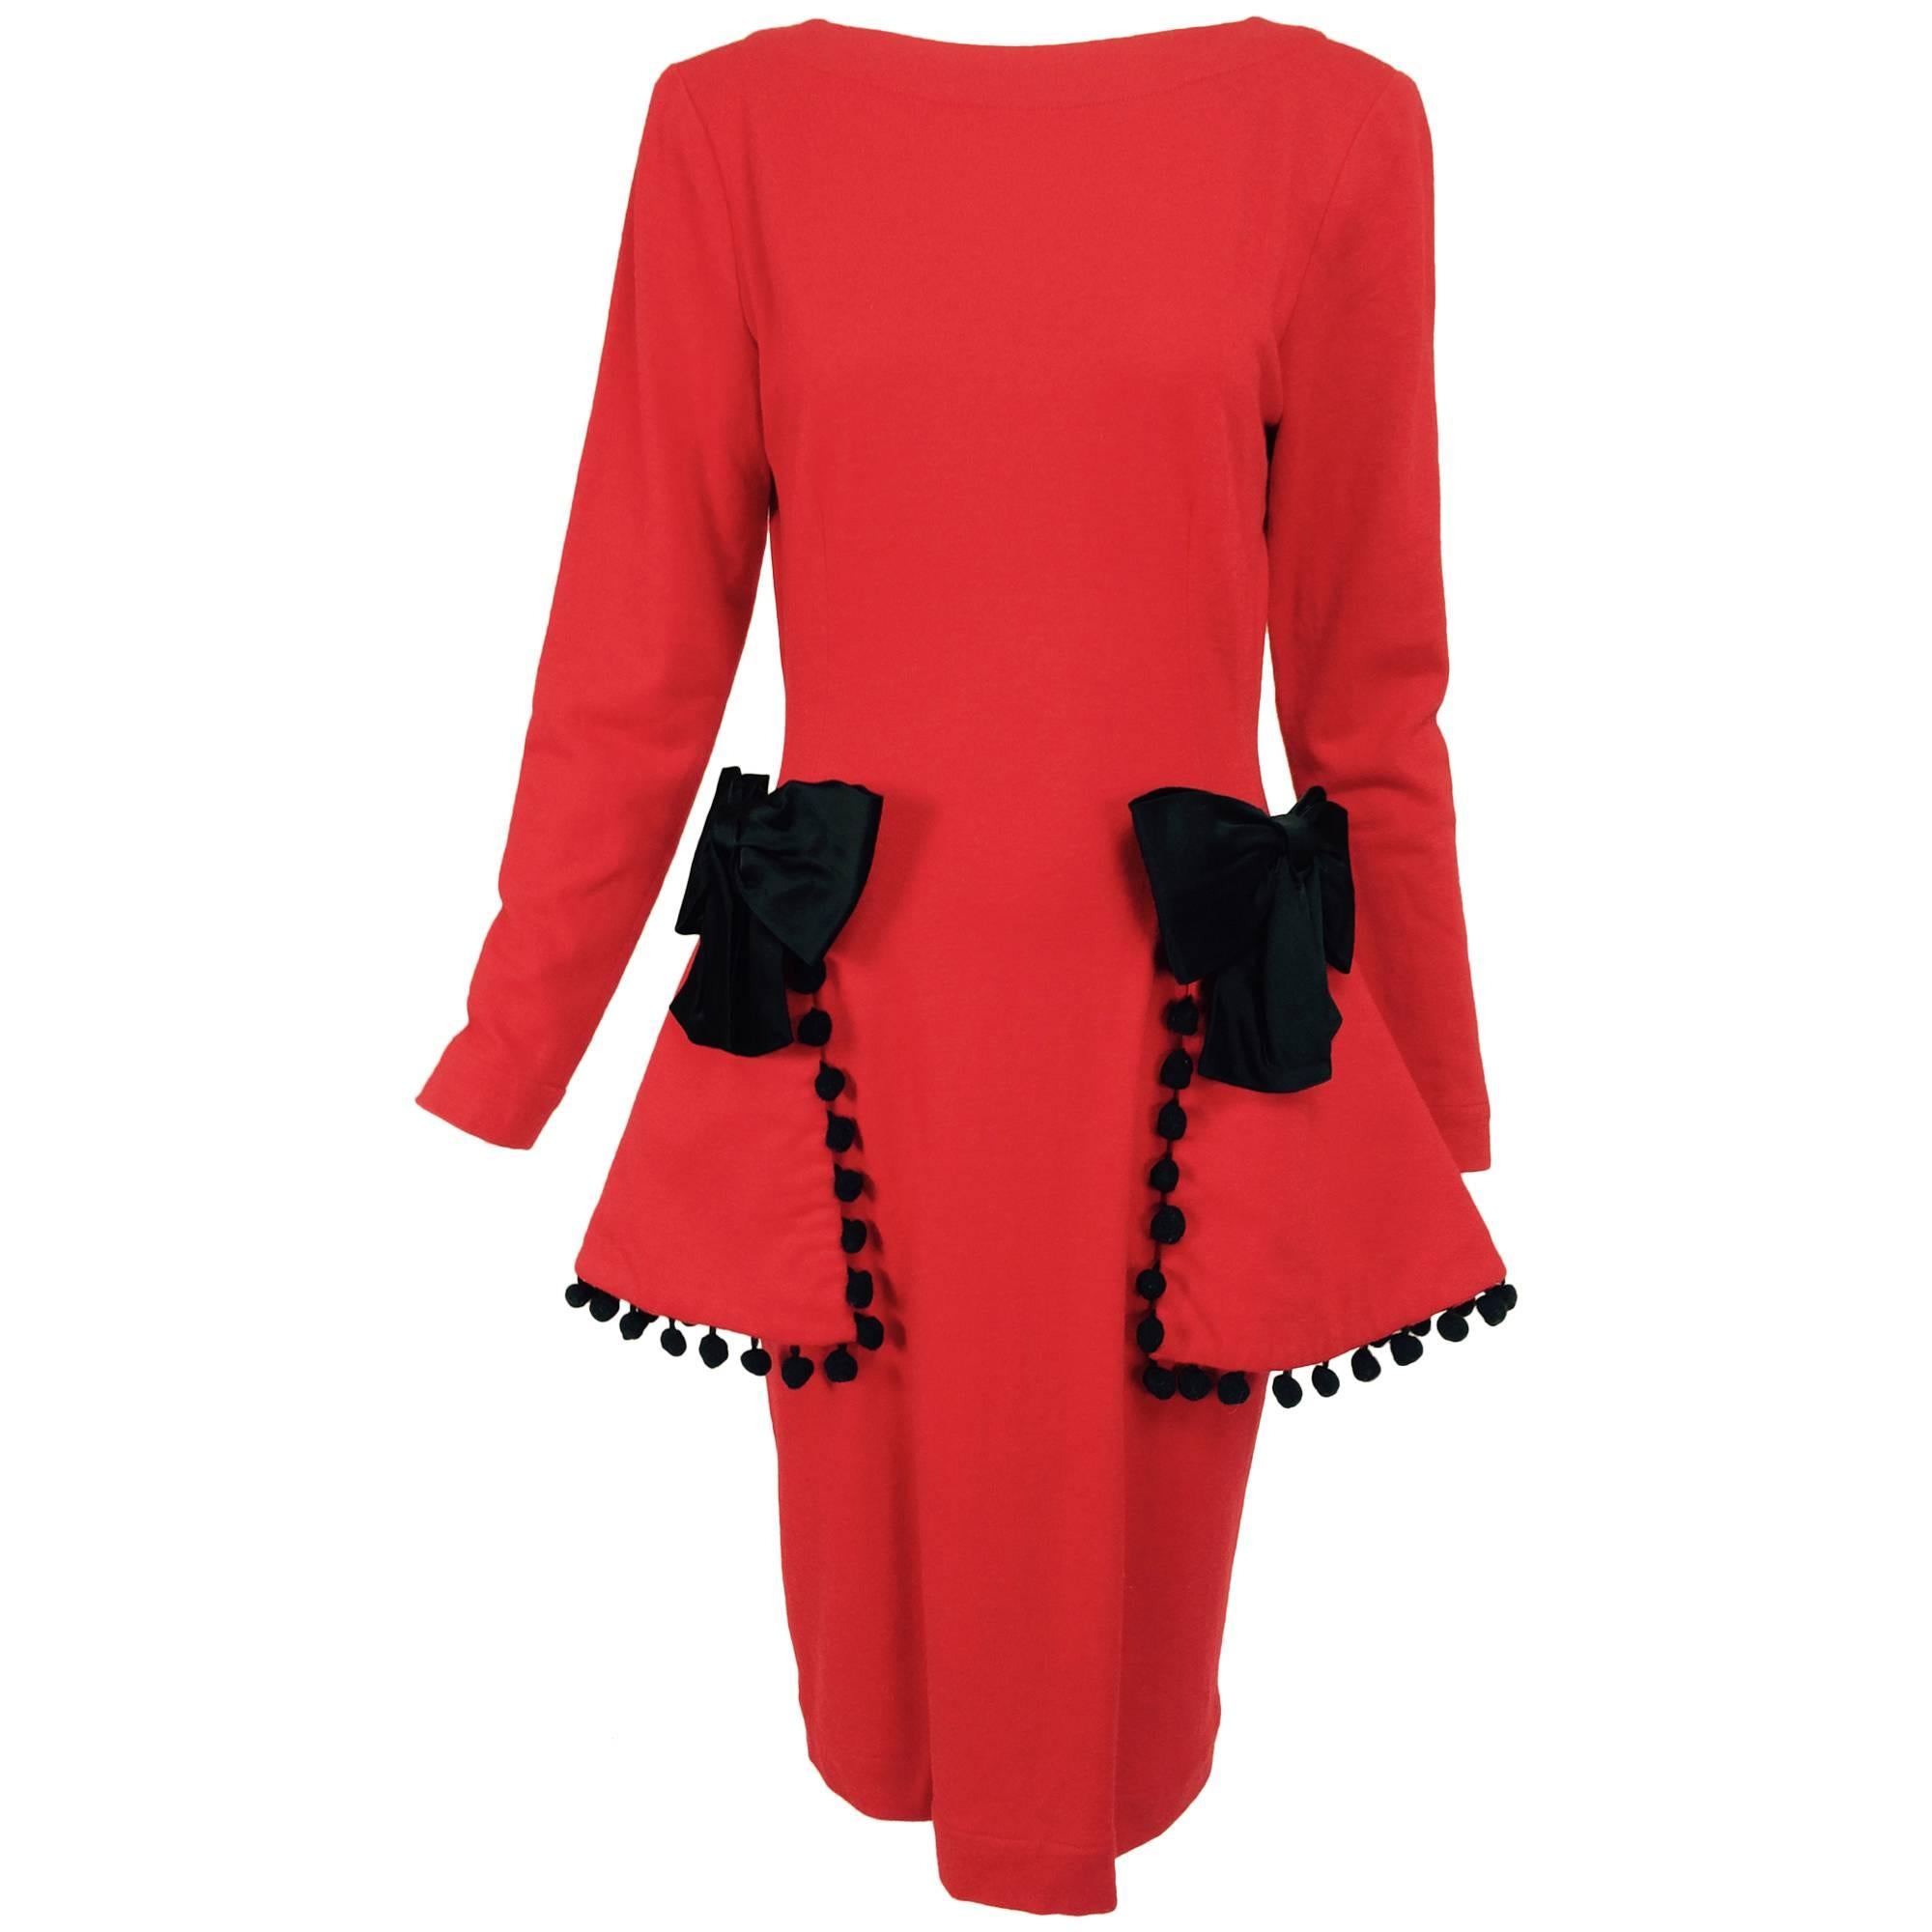 Isabelle Allard Paris red jersey dress with peplum hip bows & pom poms 1990s